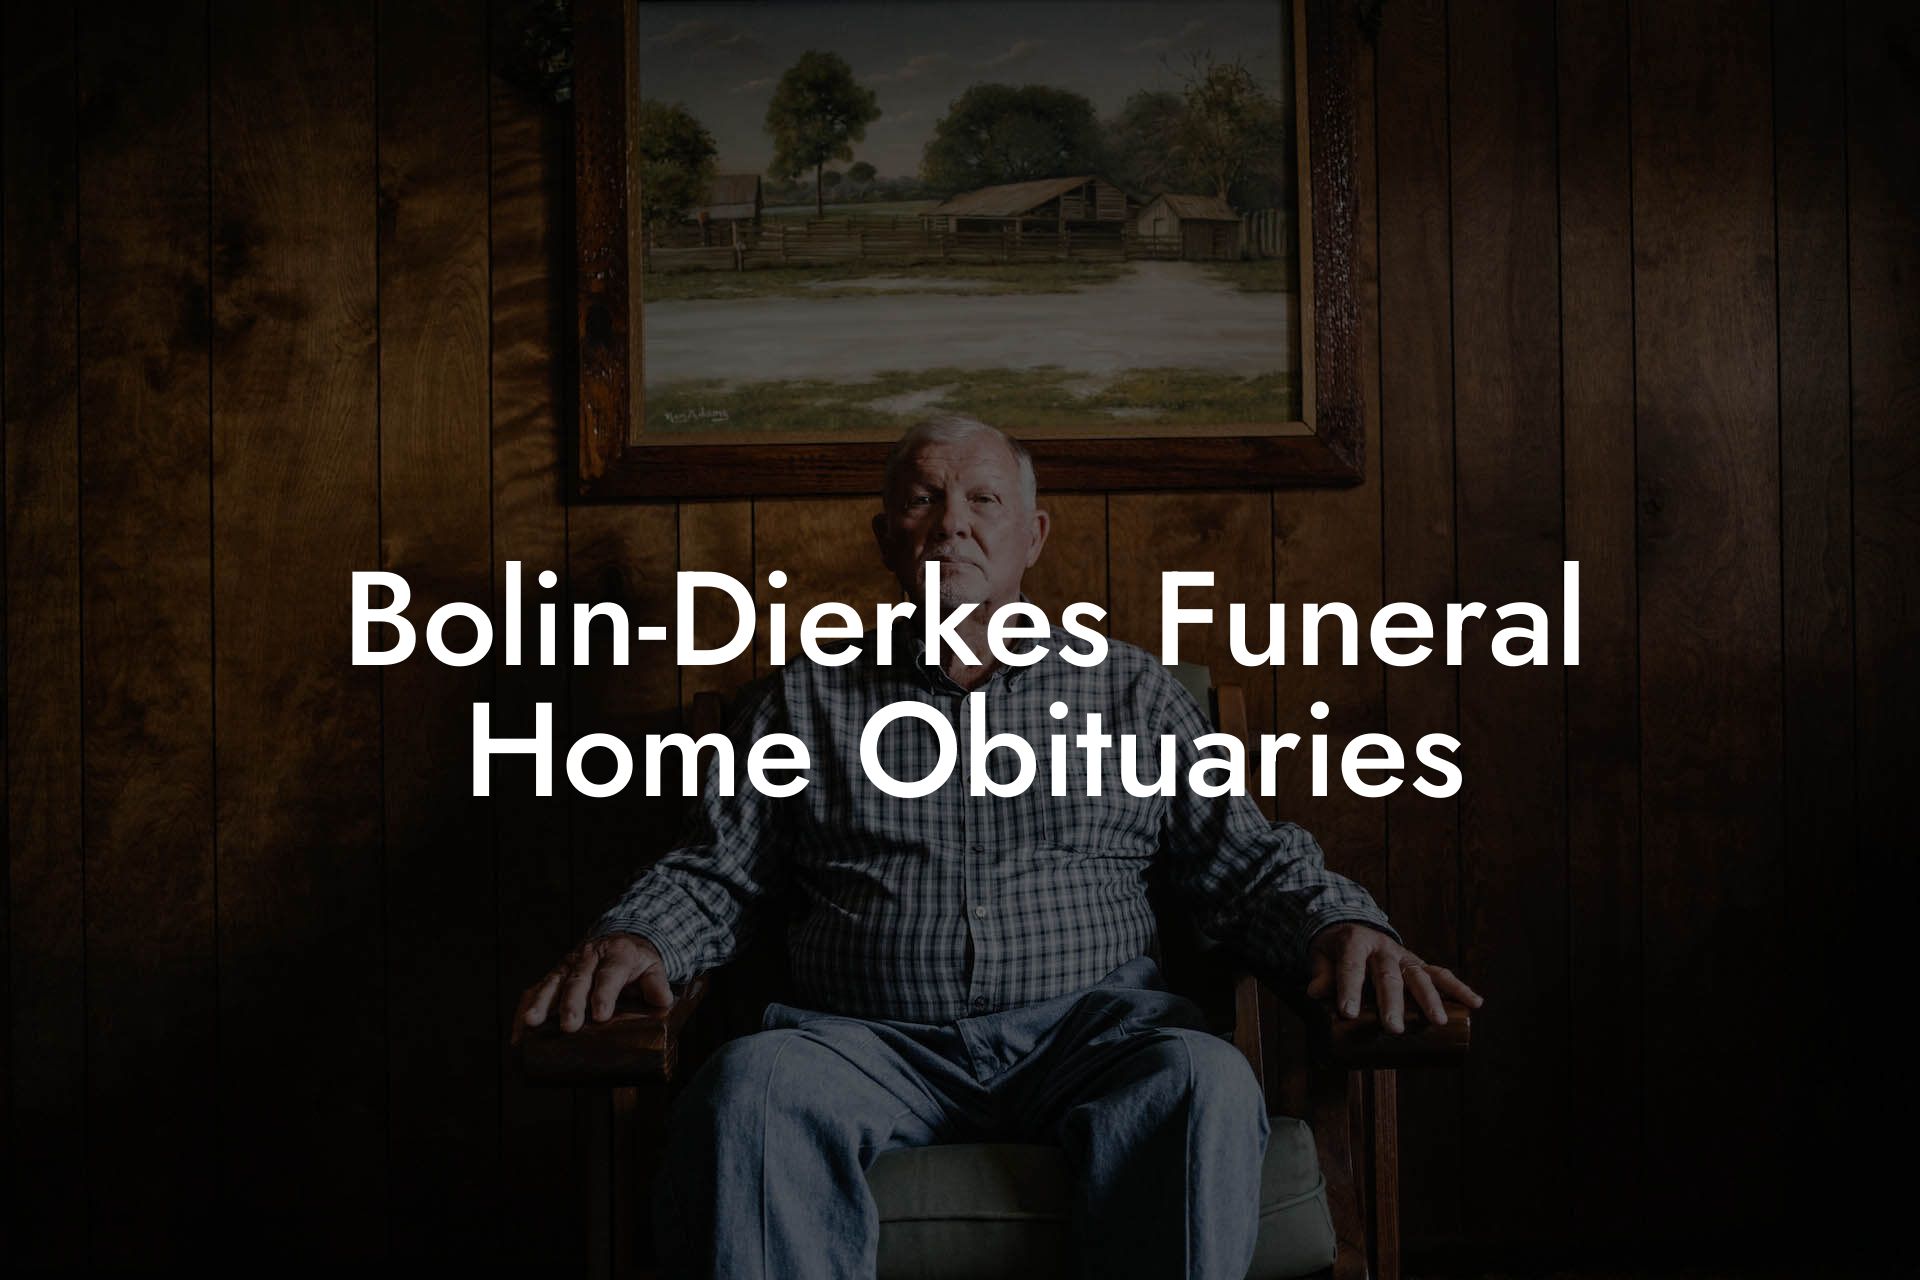 Bolin-Dierkes Funeral Home Obituaries